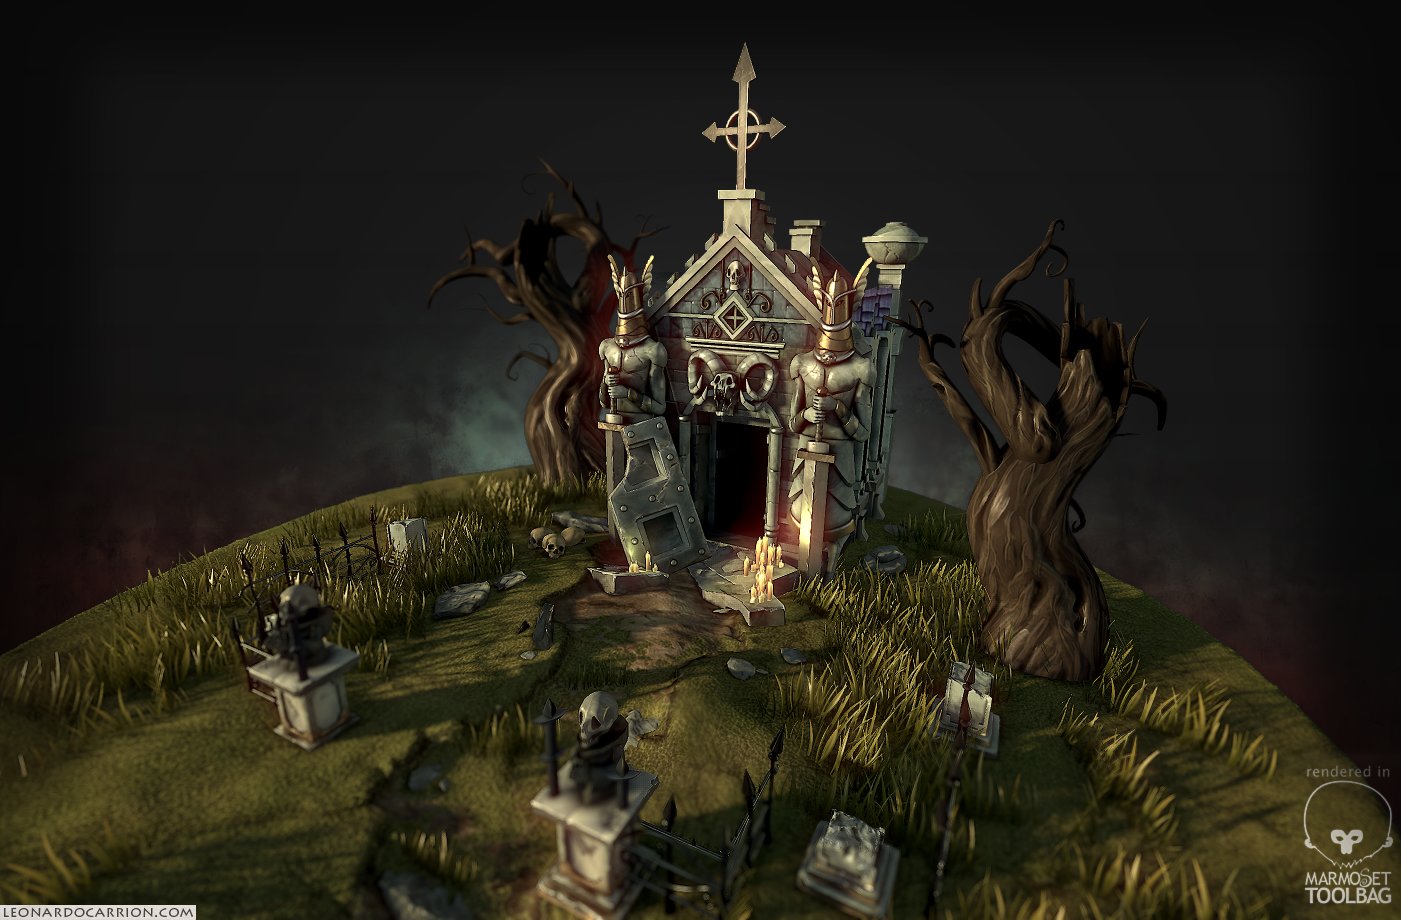 The Spooky Shrine